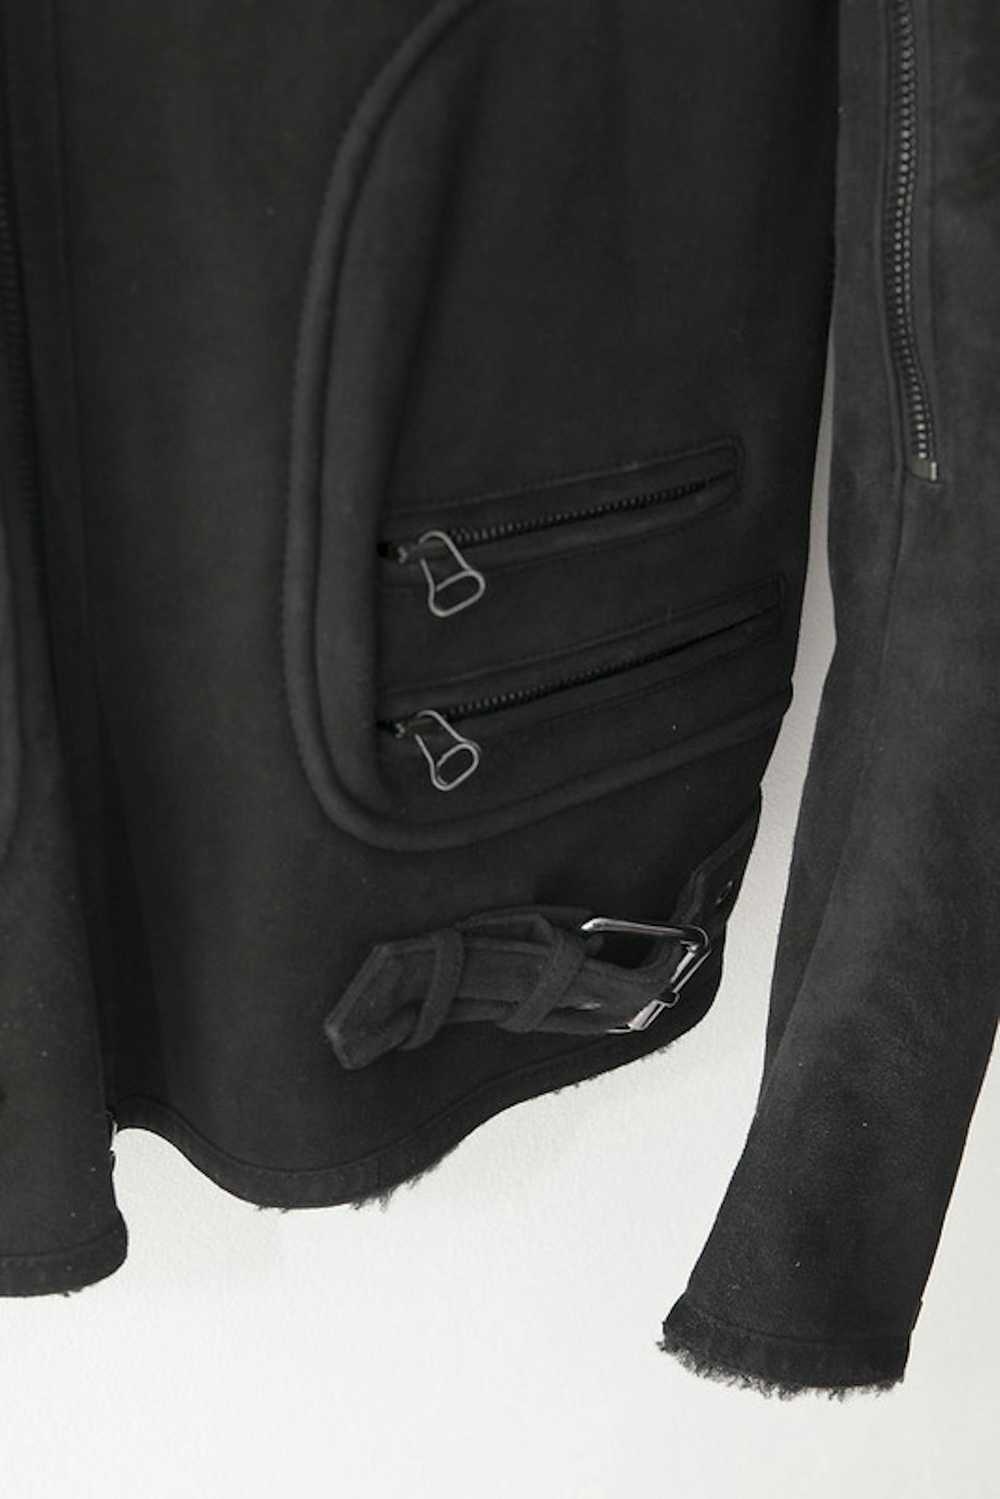 Balmain AW10 shearling perfecto leather jacket - image 3